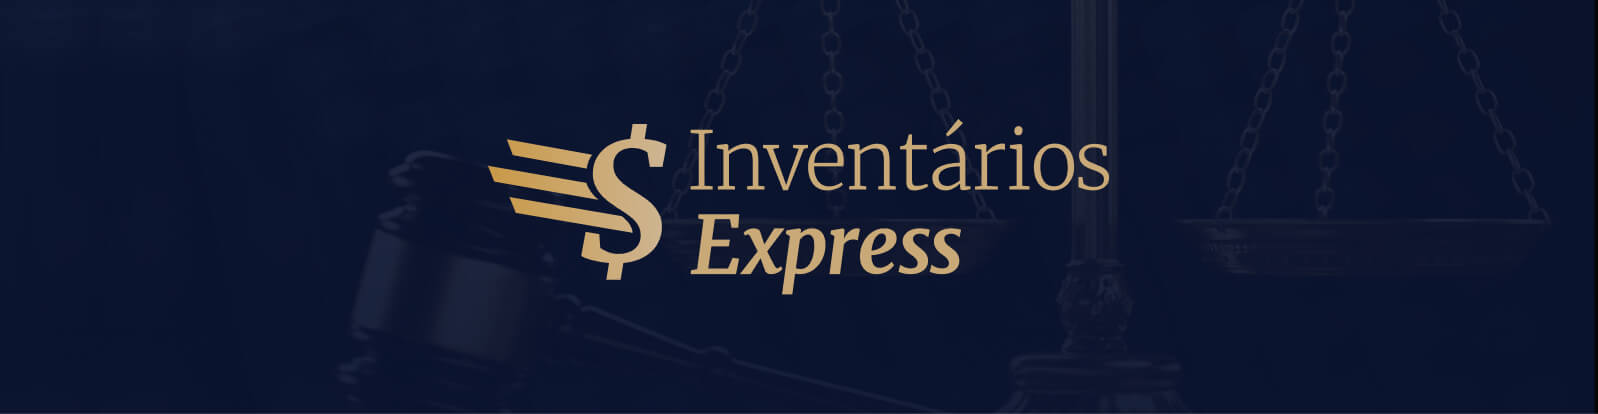 banner-inventarios-express